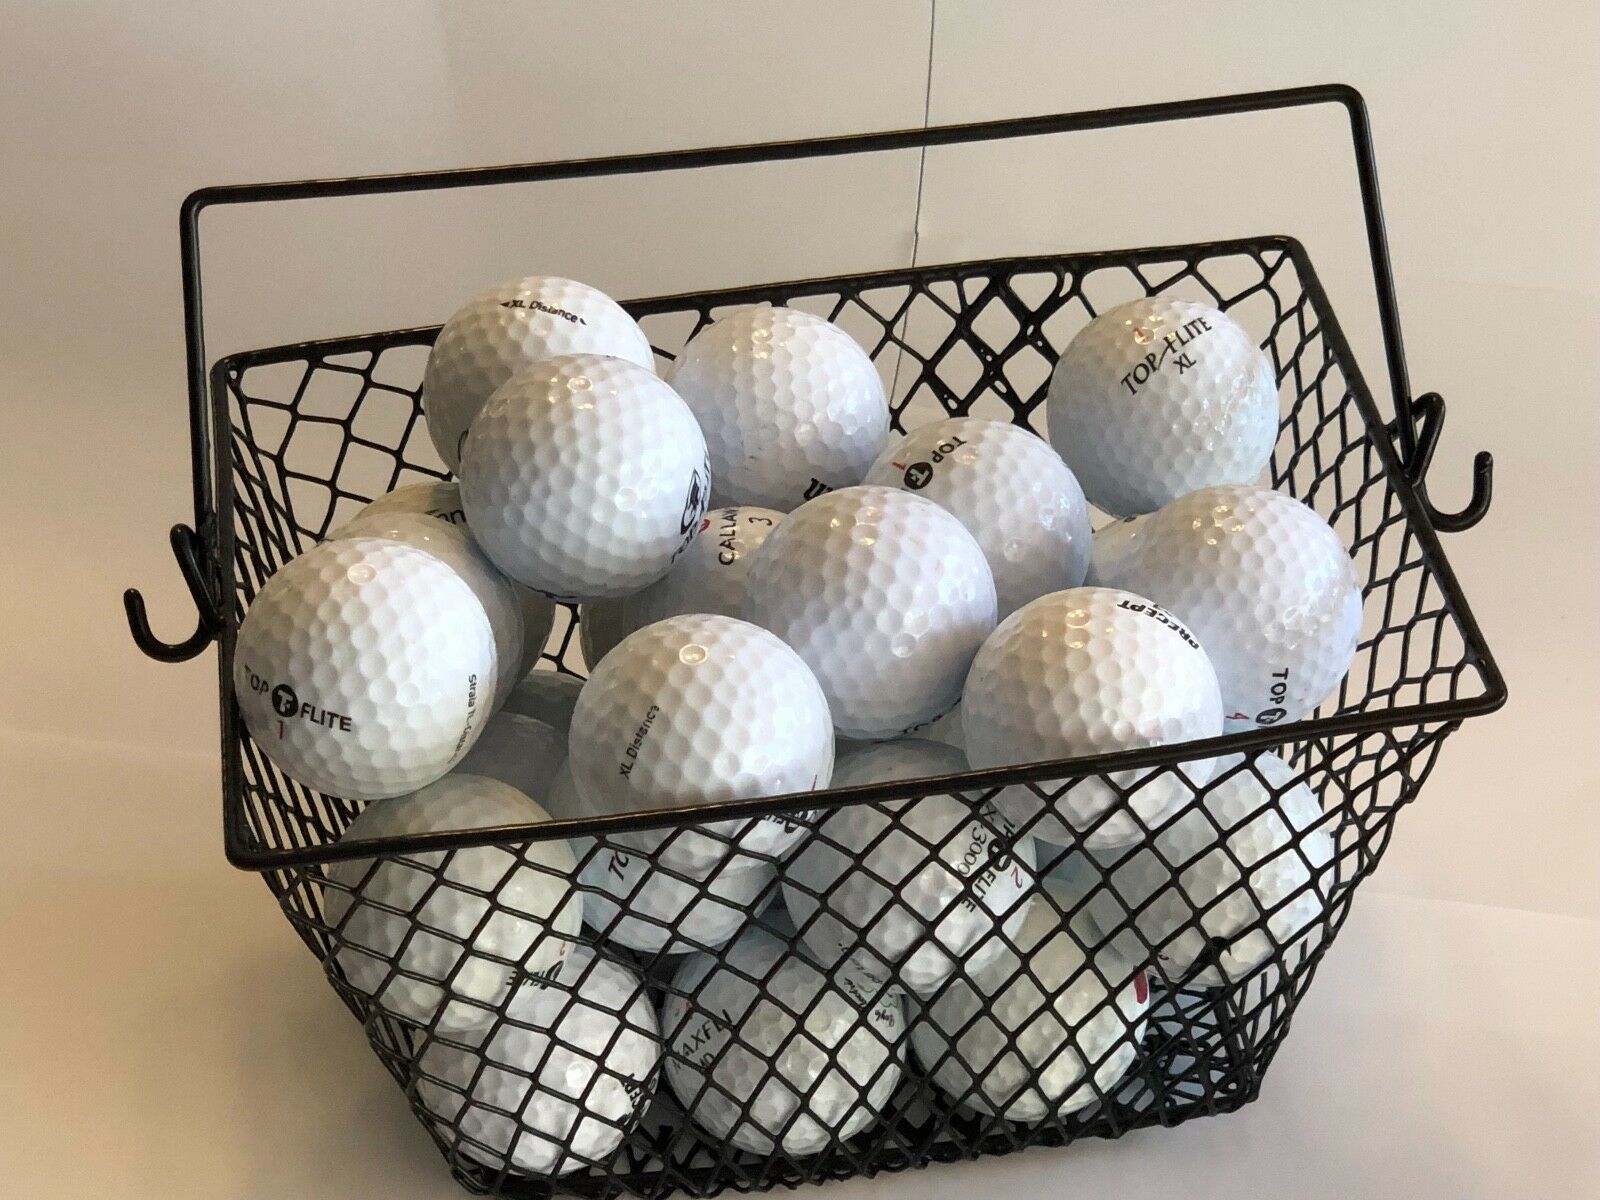 GOLF BALL BASKET... Holds 3 Dozen Balls - Use with Golf Nets